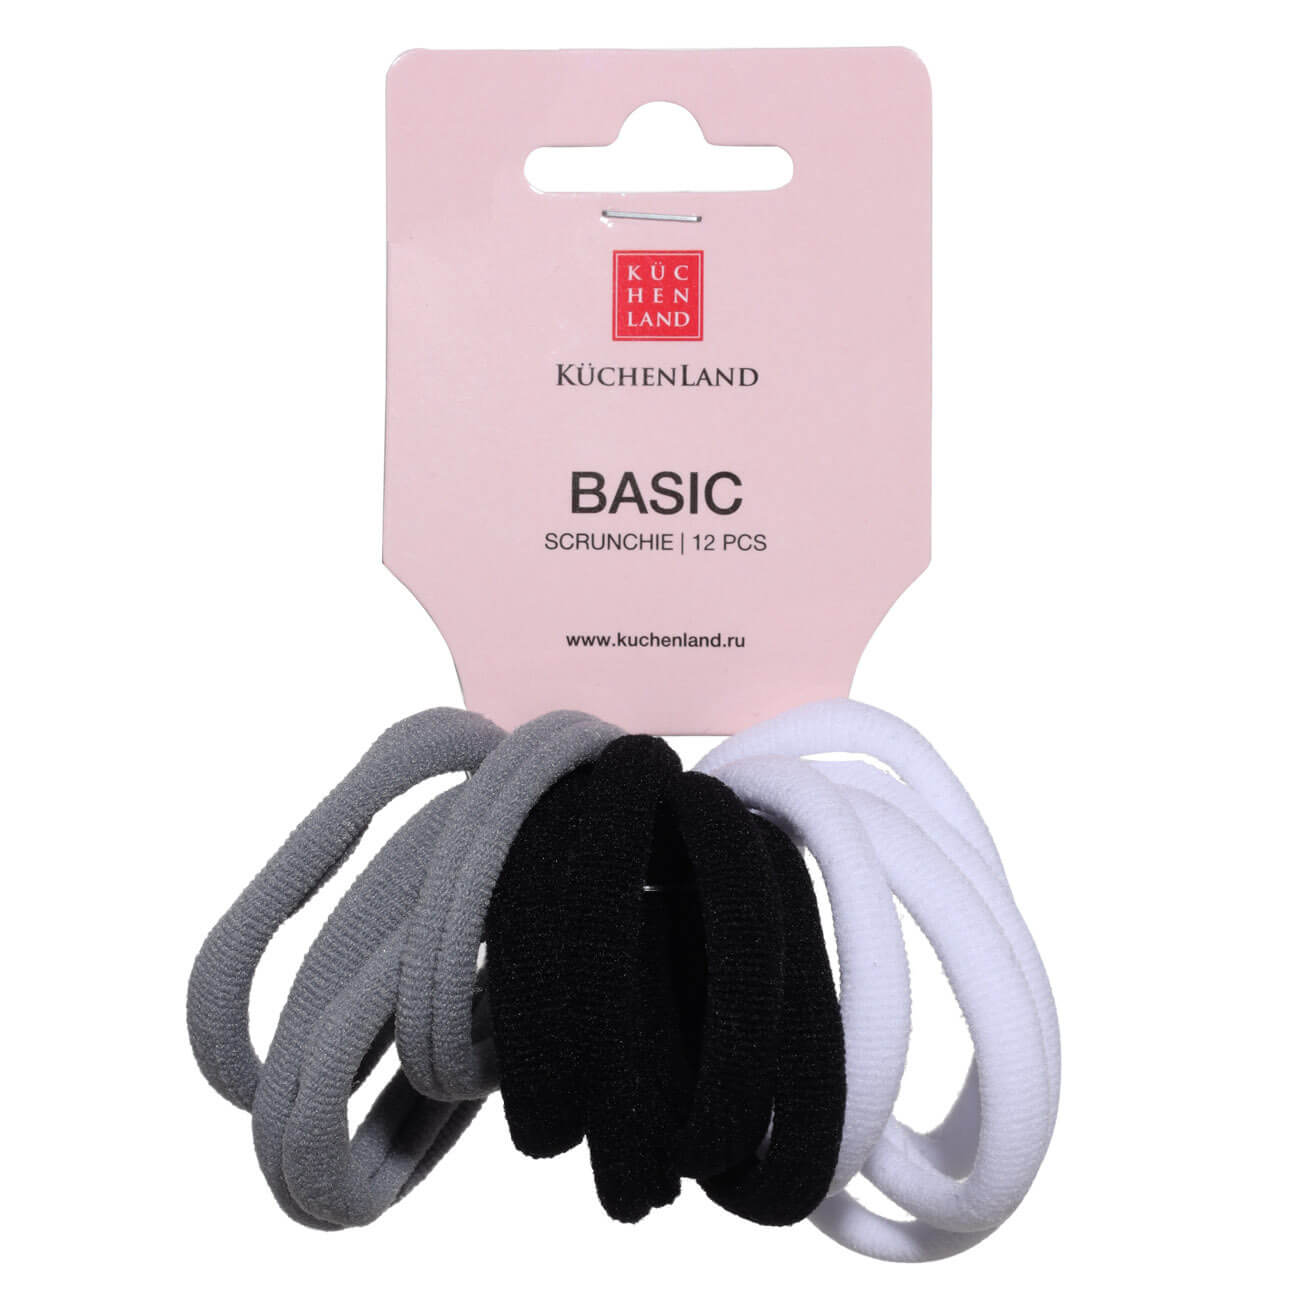 Elastic band for hair, 5 cm, 12 pcs, polyester, gray / white / black, Basic изображение № 1